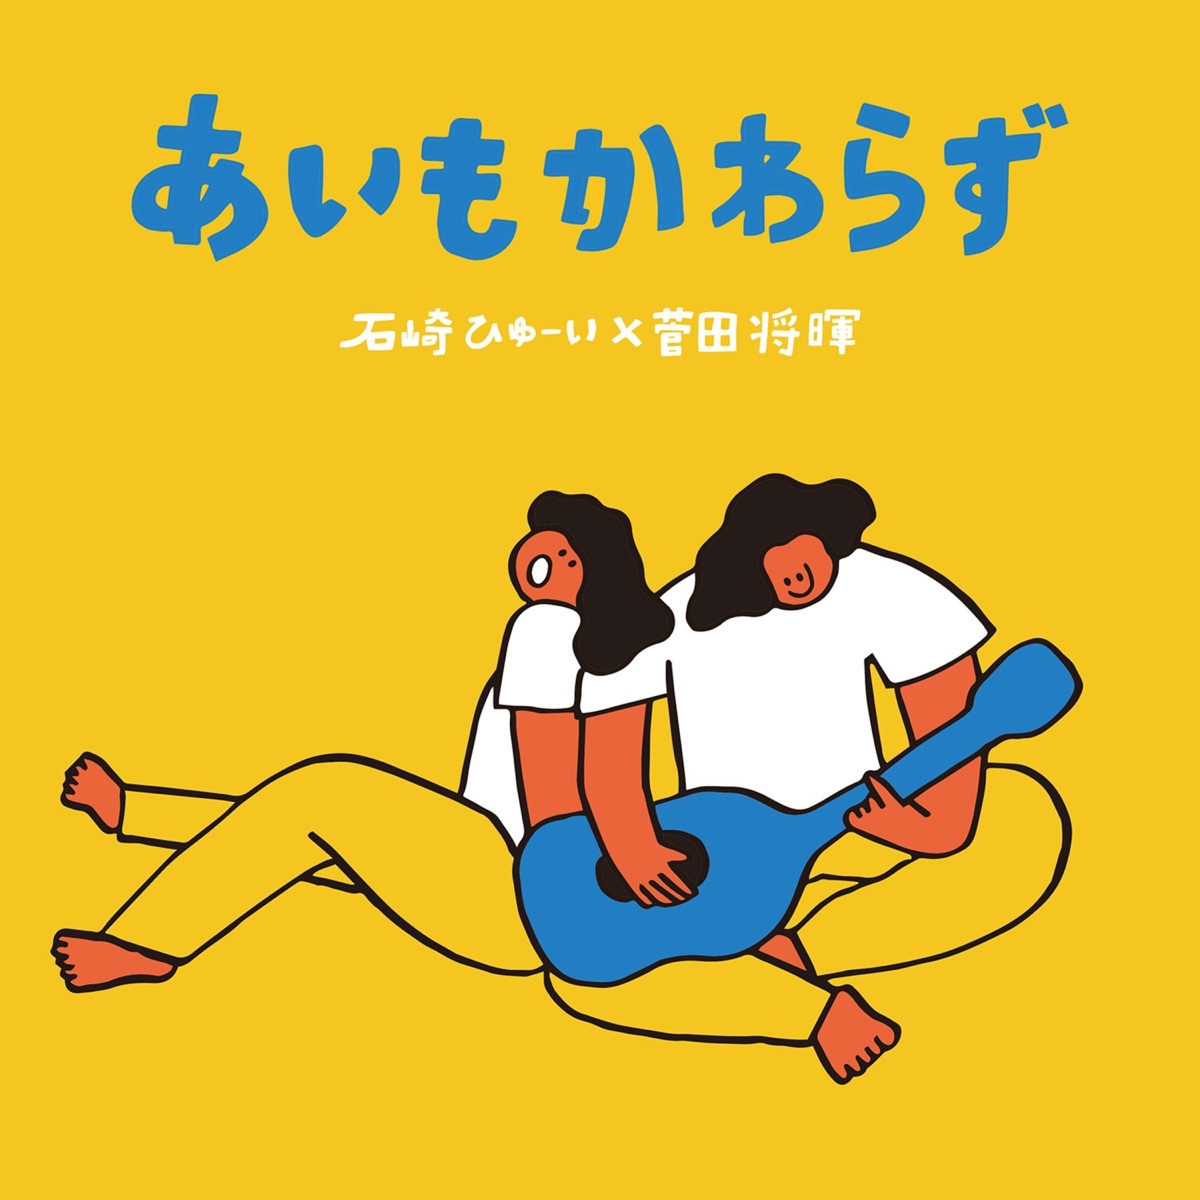 Cover art for『Huwie Ishizaki×Masaki Suda - あいもかわらず』from the release『Ai mo Kawarazu